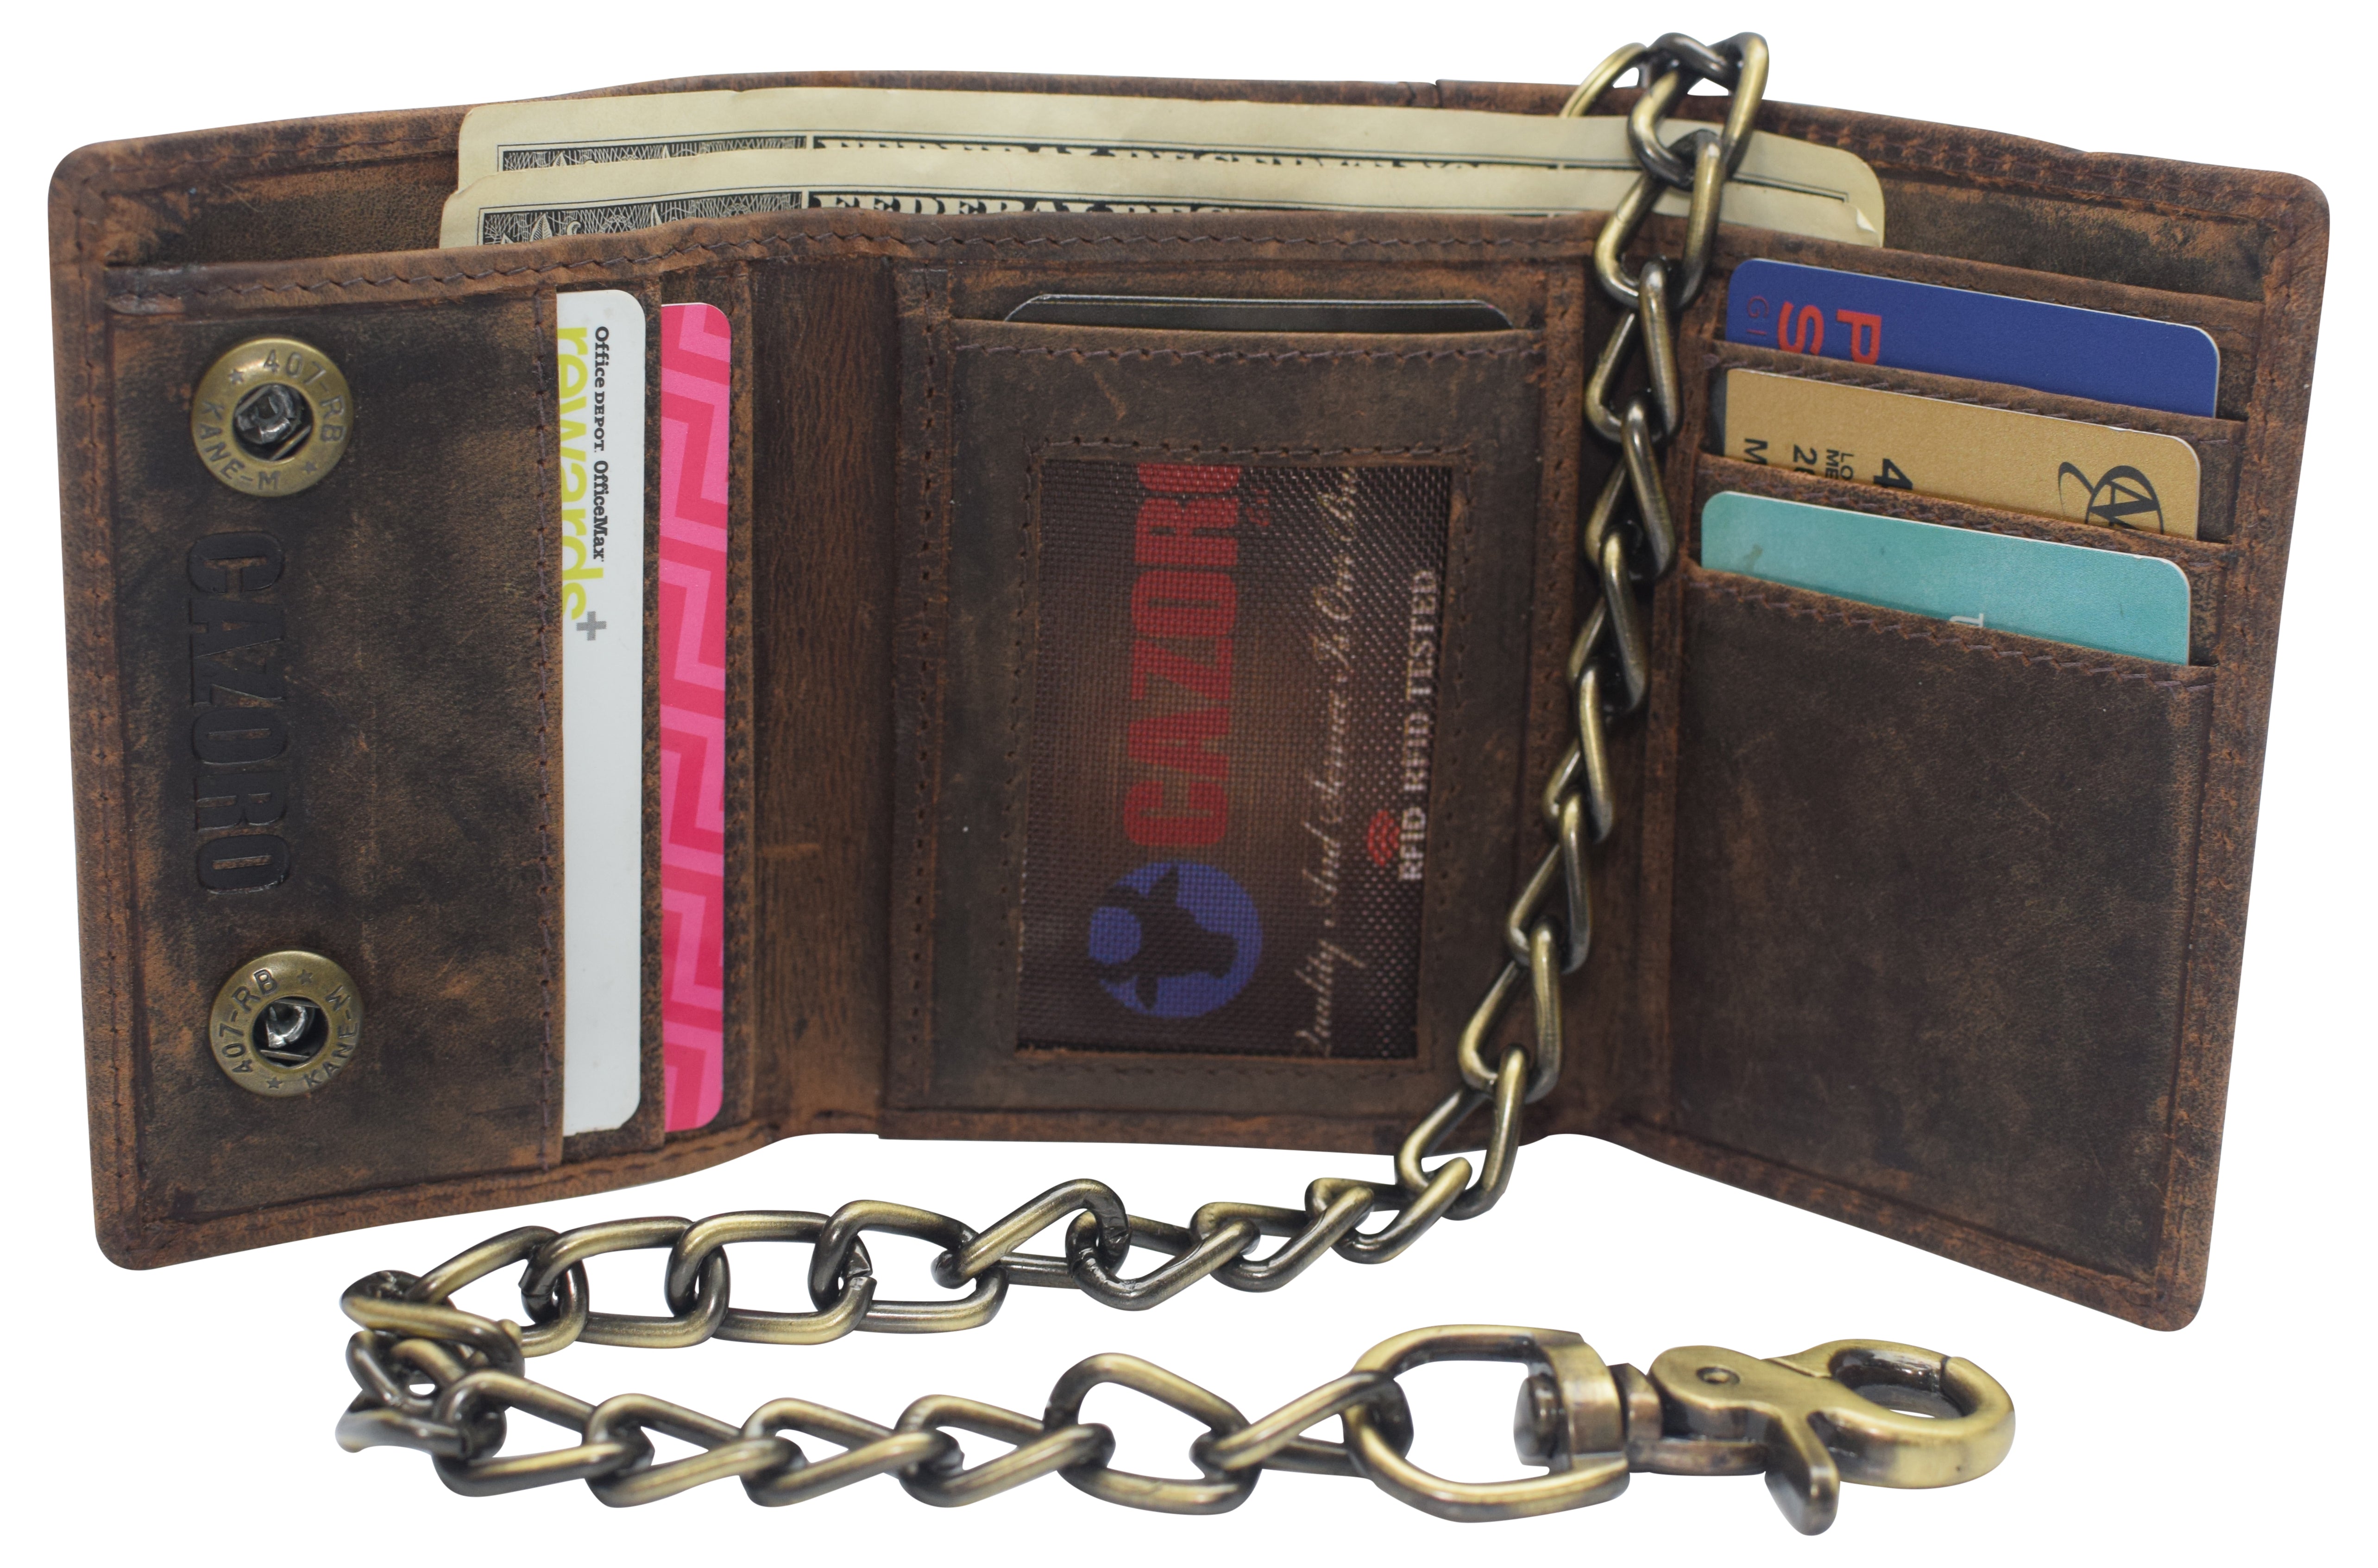 Leather Coin Pouch Change Holder Mini Pocket Wallet for Men, Vintage Brown  (Pack of 1)